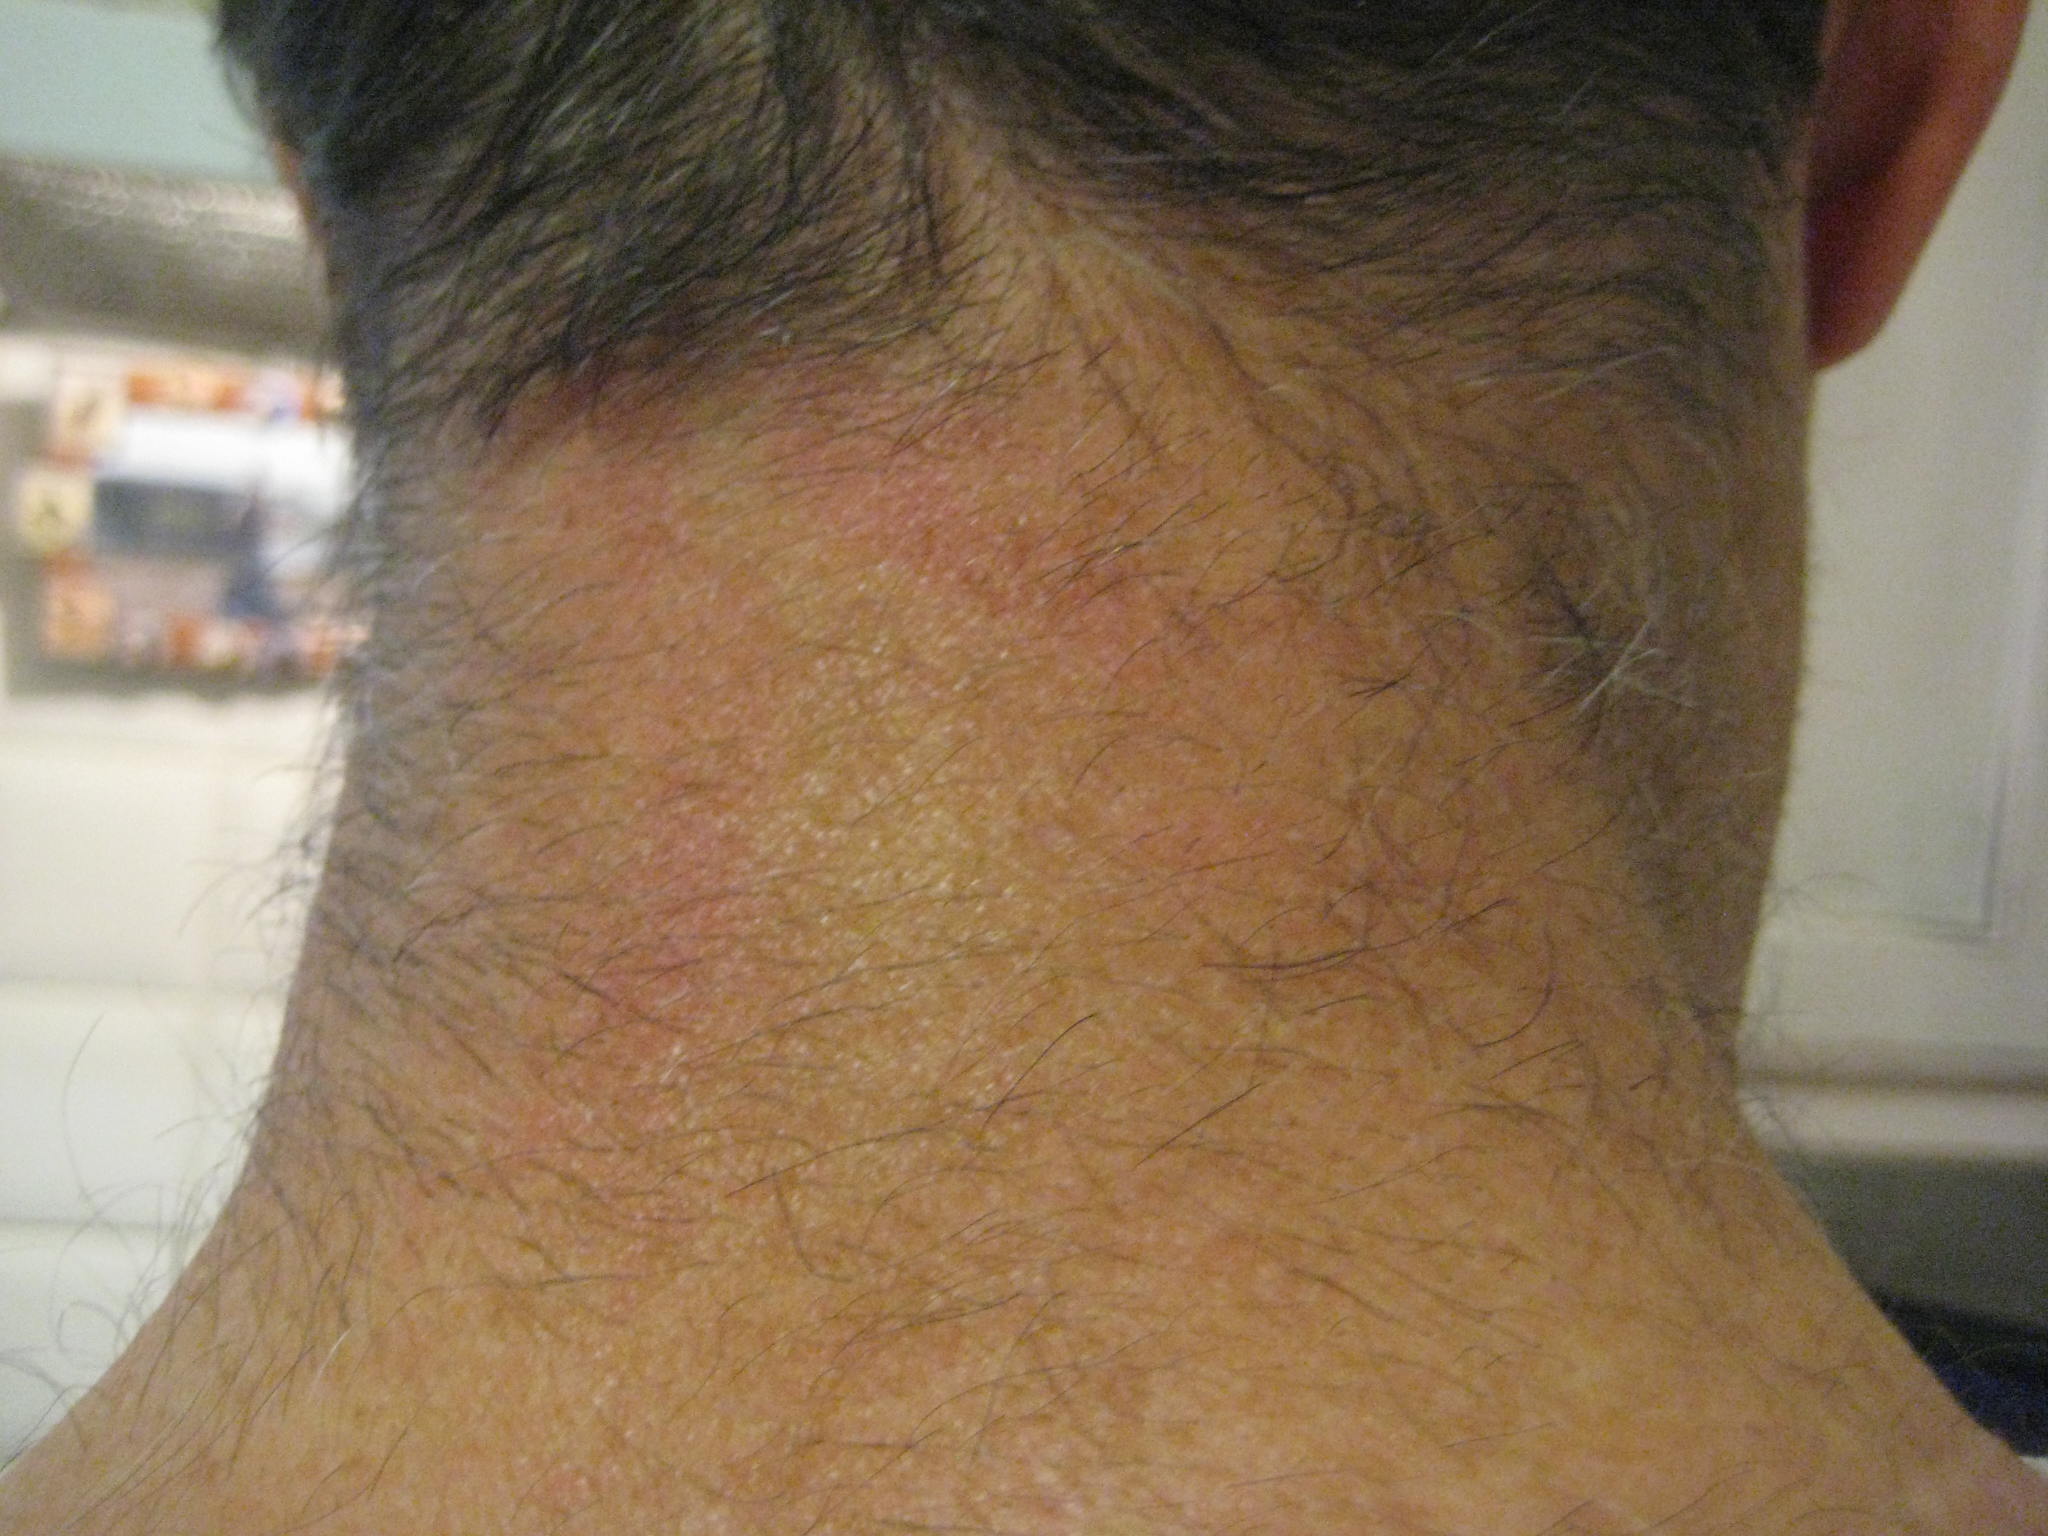 swollen lymph nodes on back of head